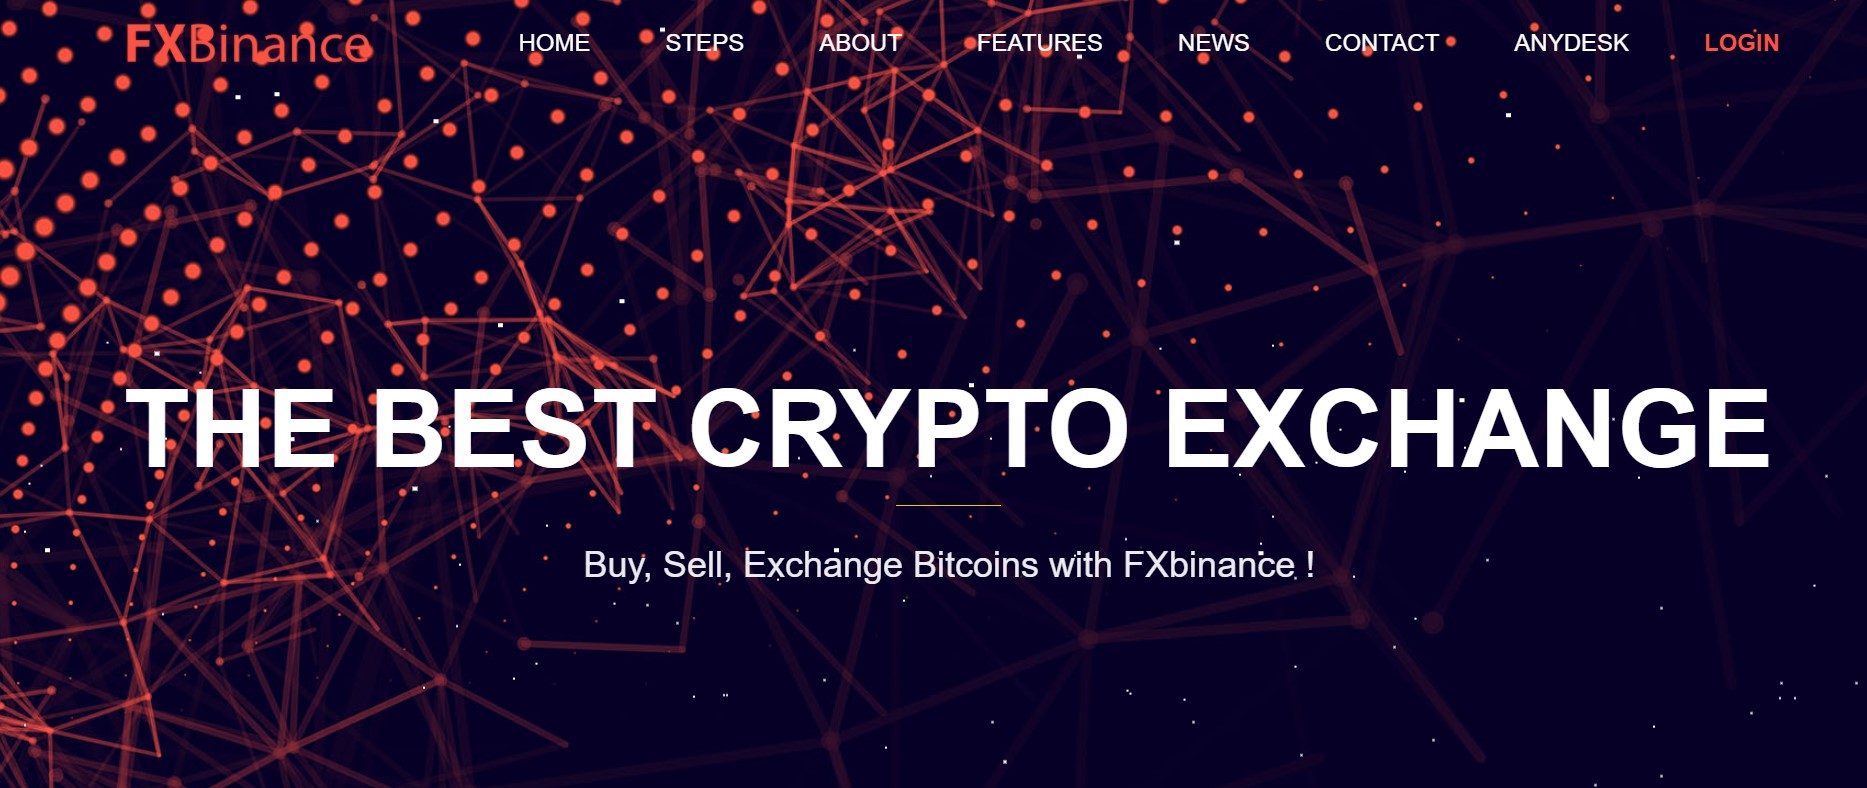 FXBinance website